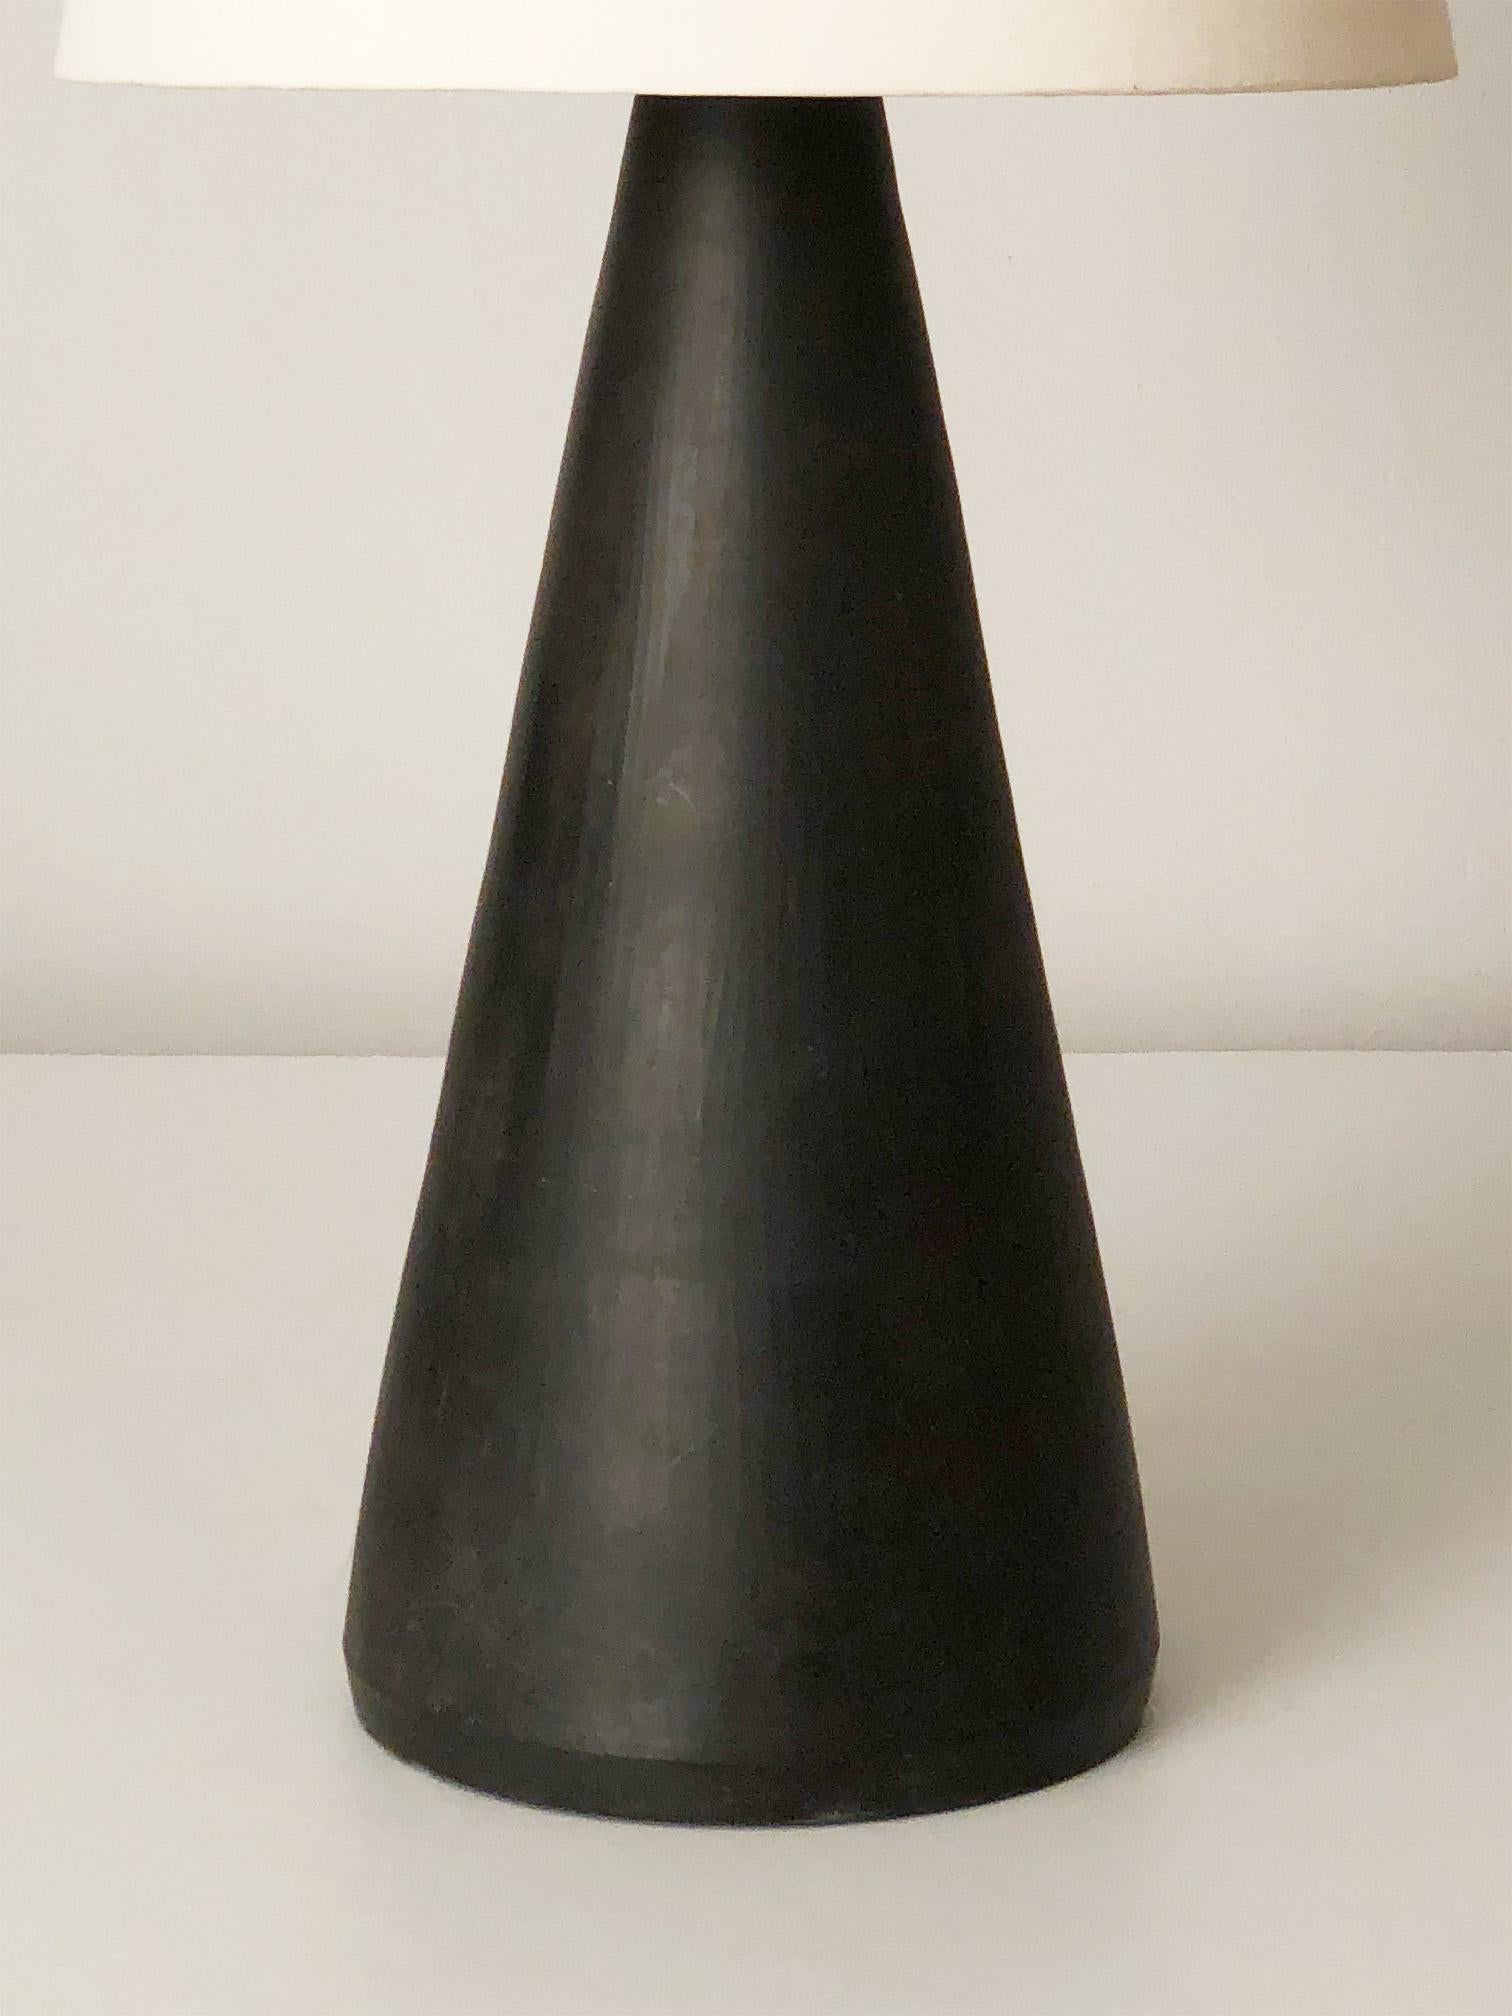 Turned Large Axel Brüel Black Glaze Danish Mid-Century Ceramic Table Lamp by Nymølle